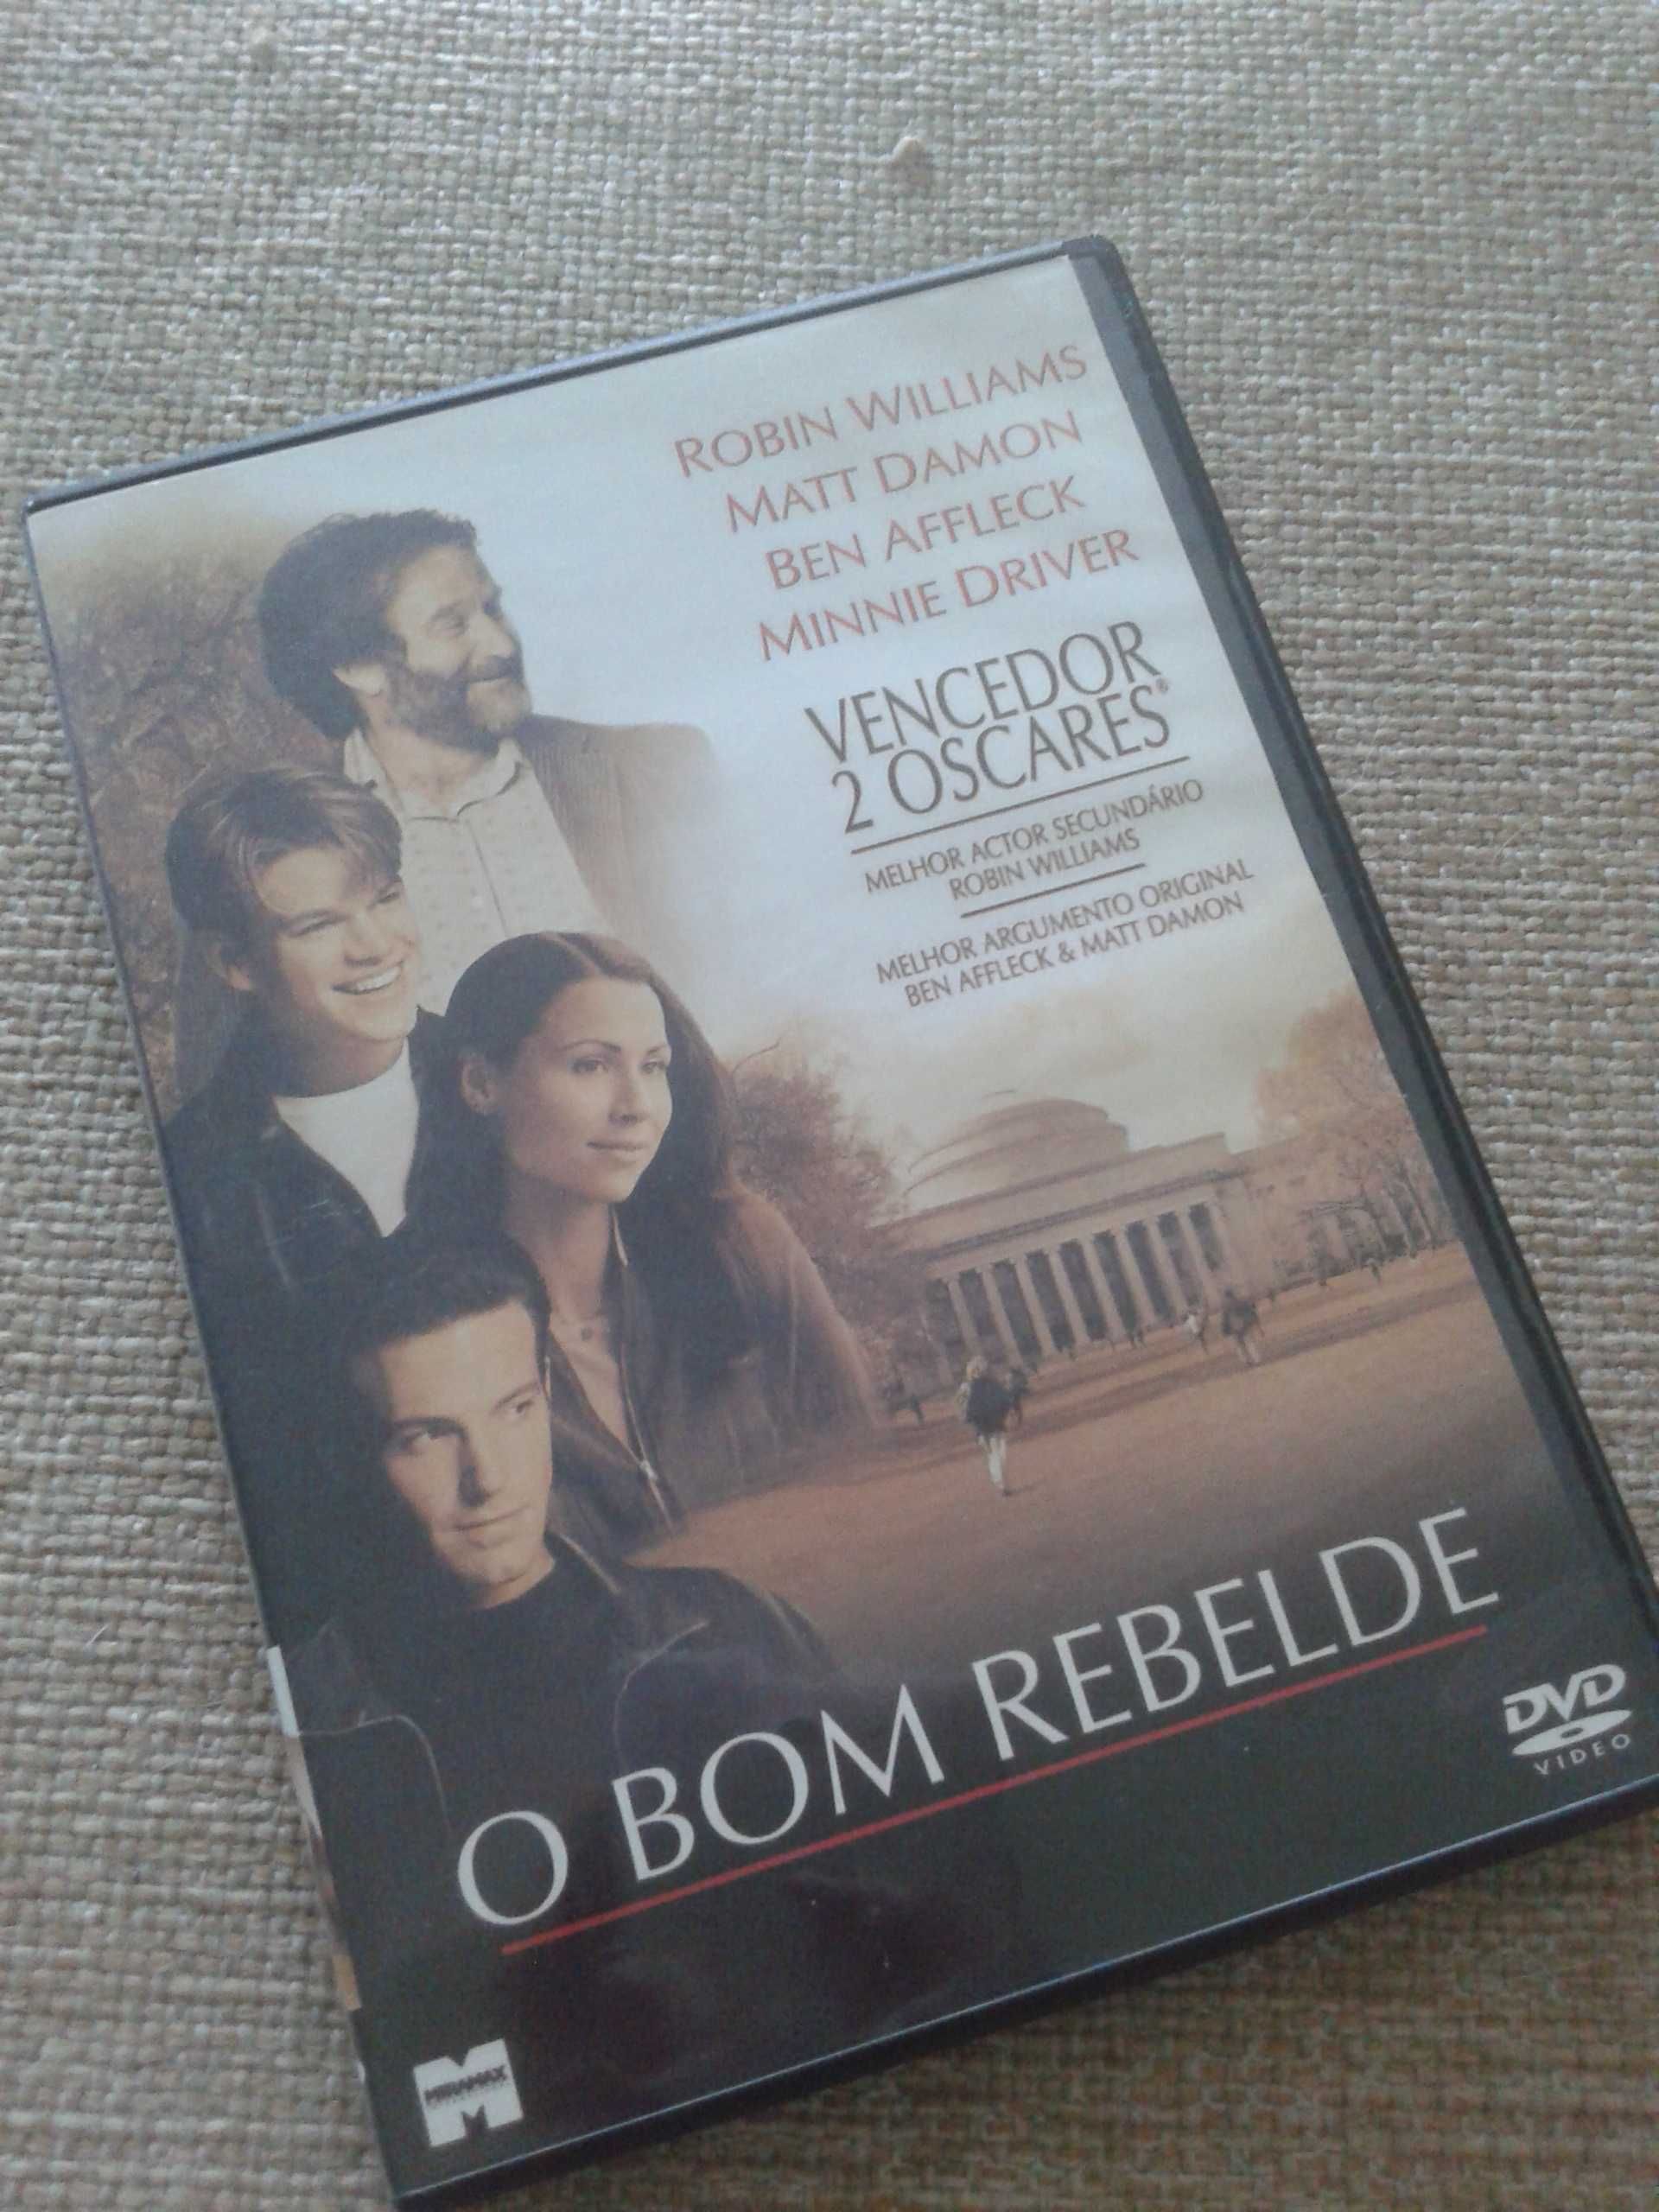 O Bom Rebelde (DVD)